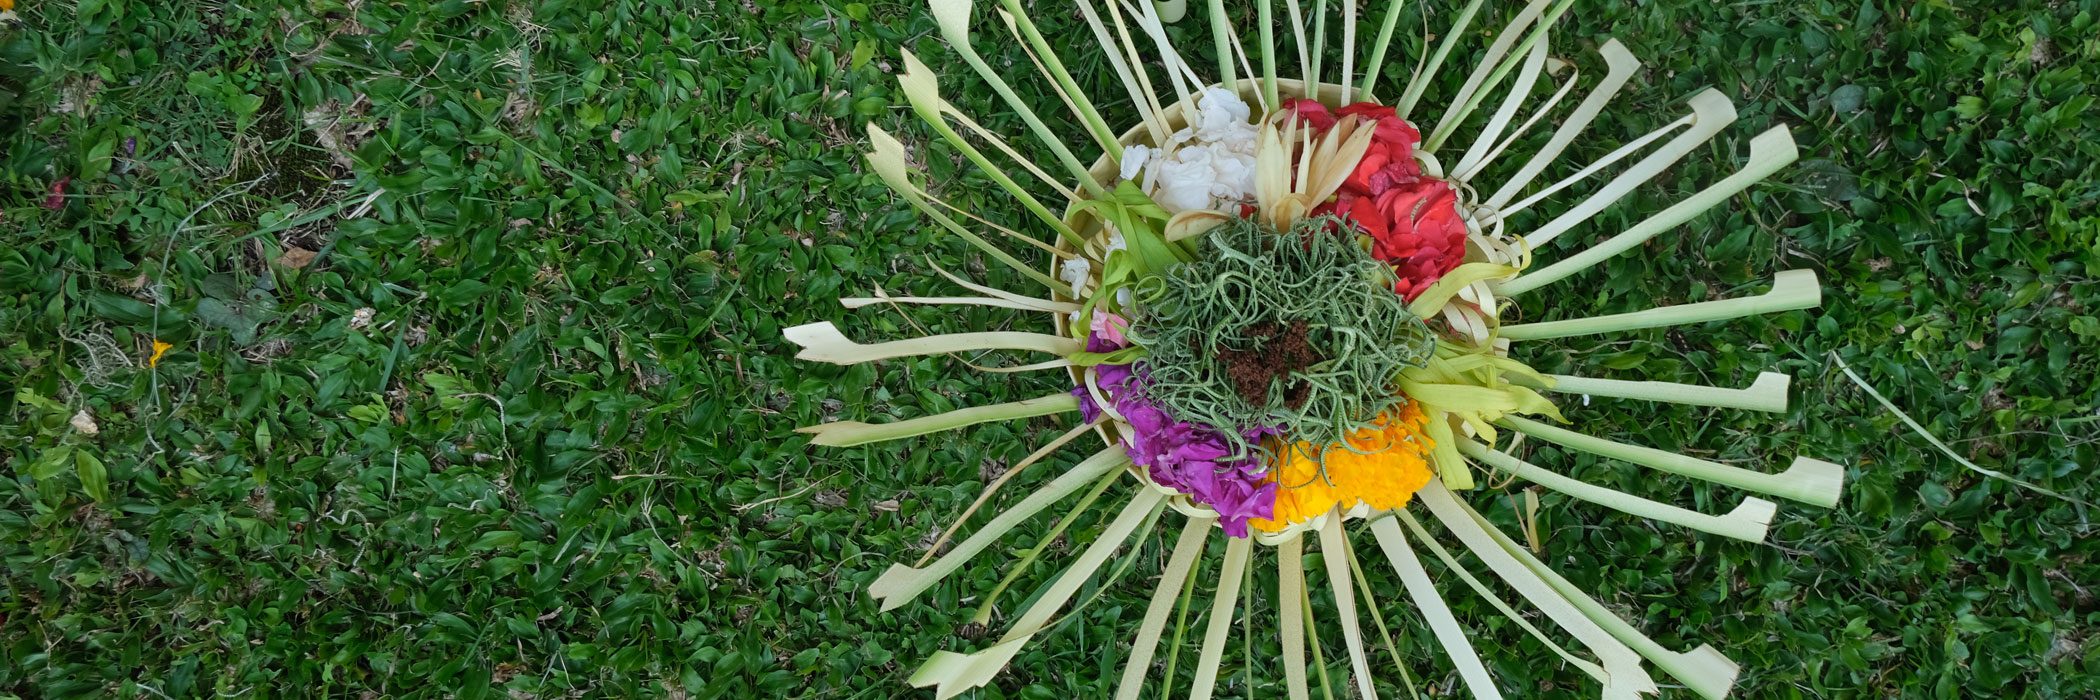 Raffles Bali - Tumpek Ceremonies: Honouring the Diversity of Life in Bali